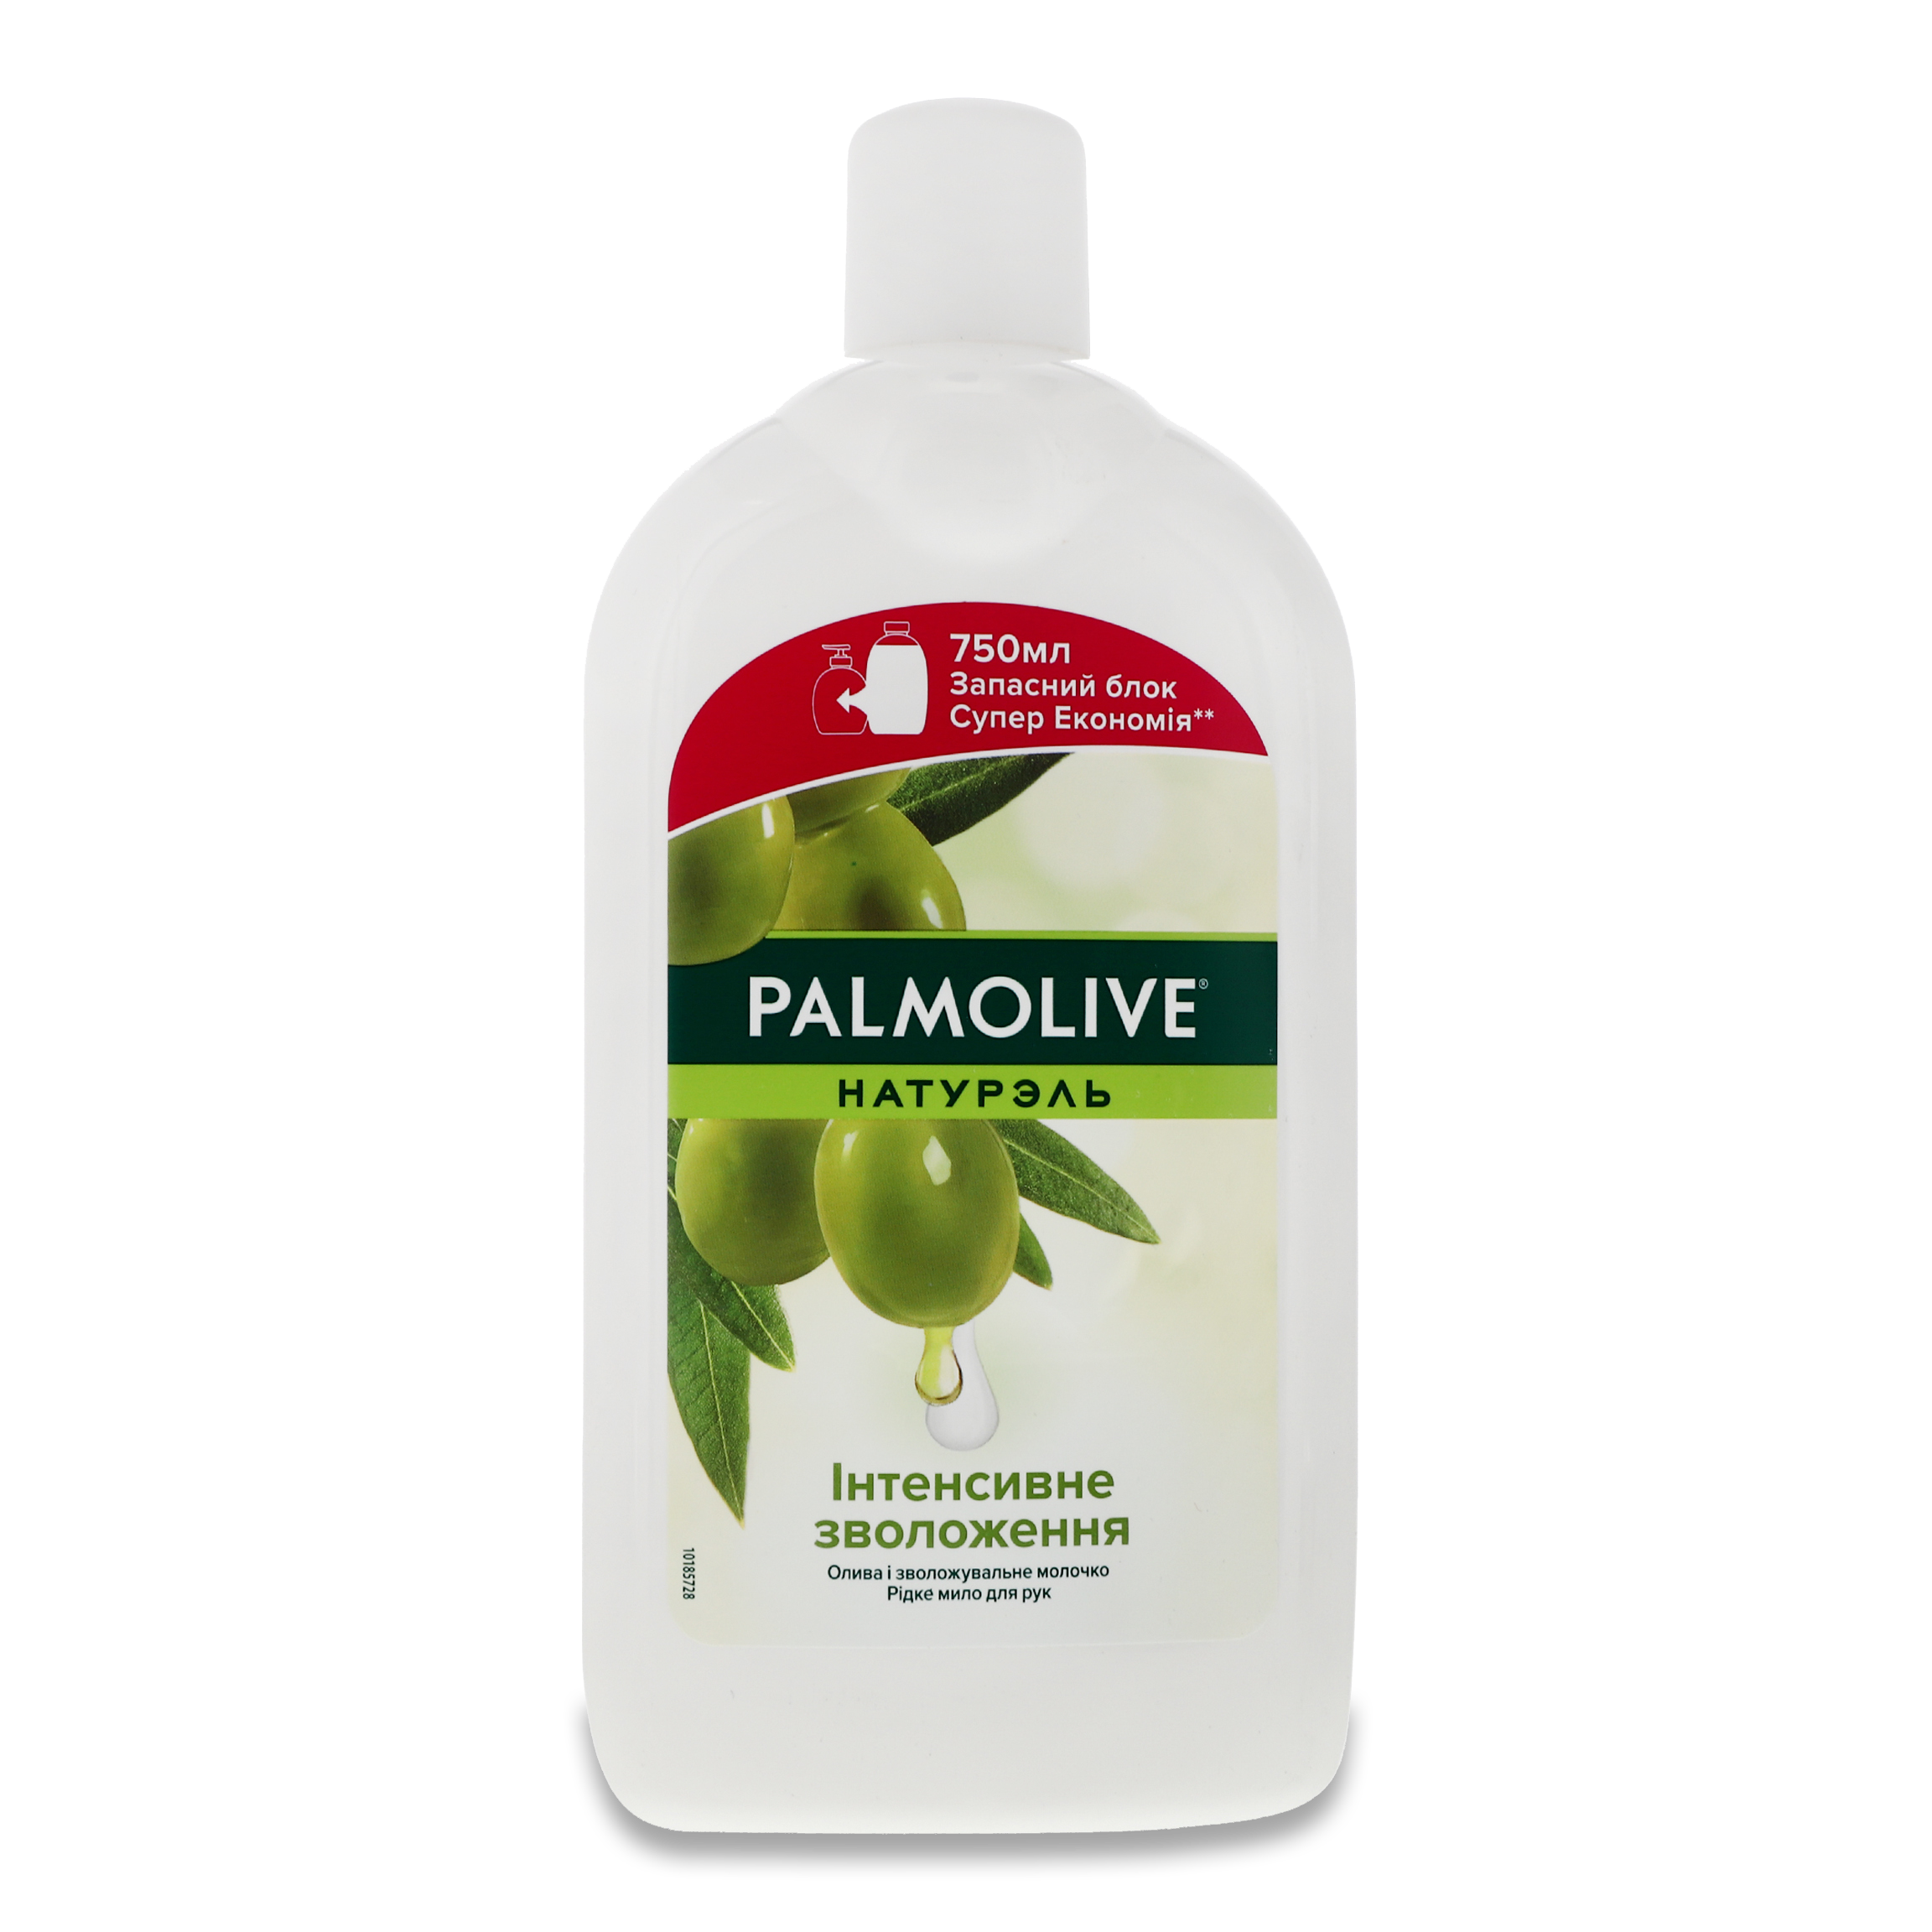 Palmolive Naturel Liquid soap Intensive moisturizing Oil and moisturizing milk replaceable unit 750ml